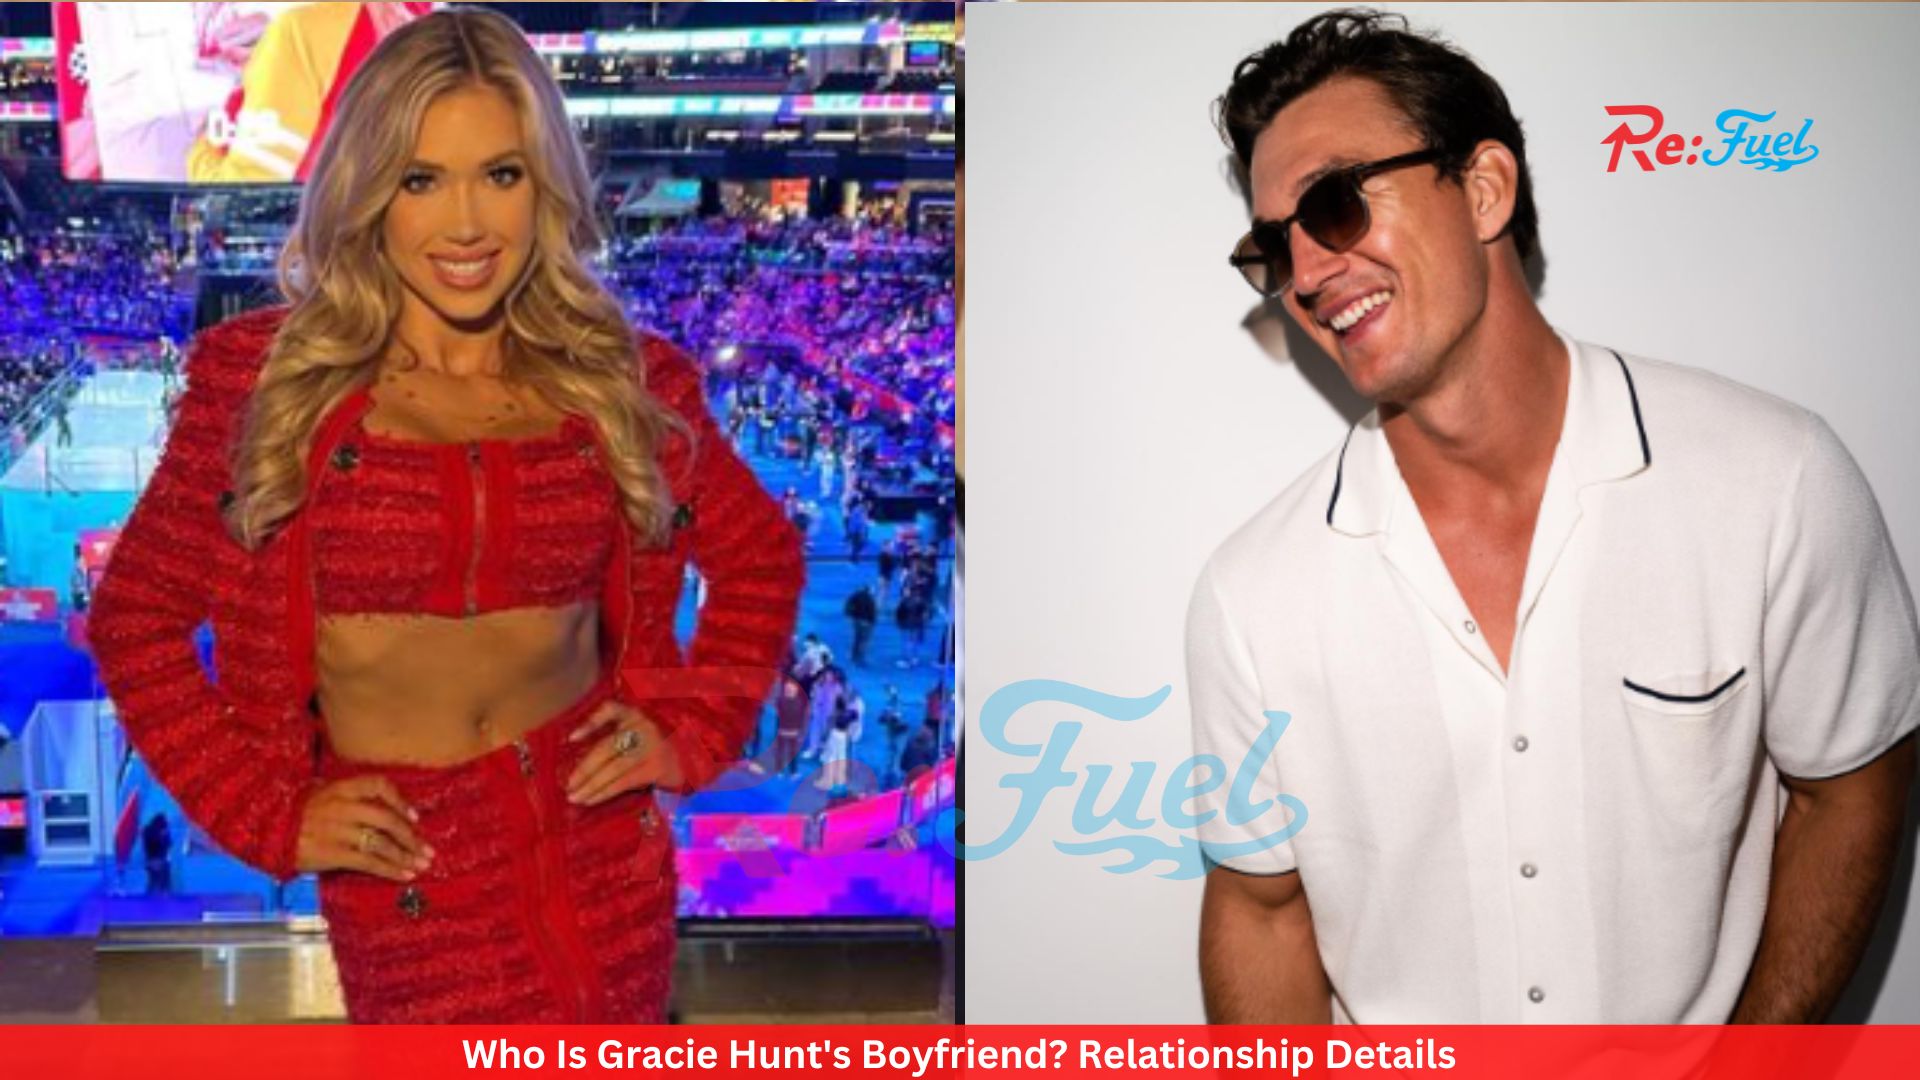 Who Is Gracie Hunt's Boyfriend? Relationship Details